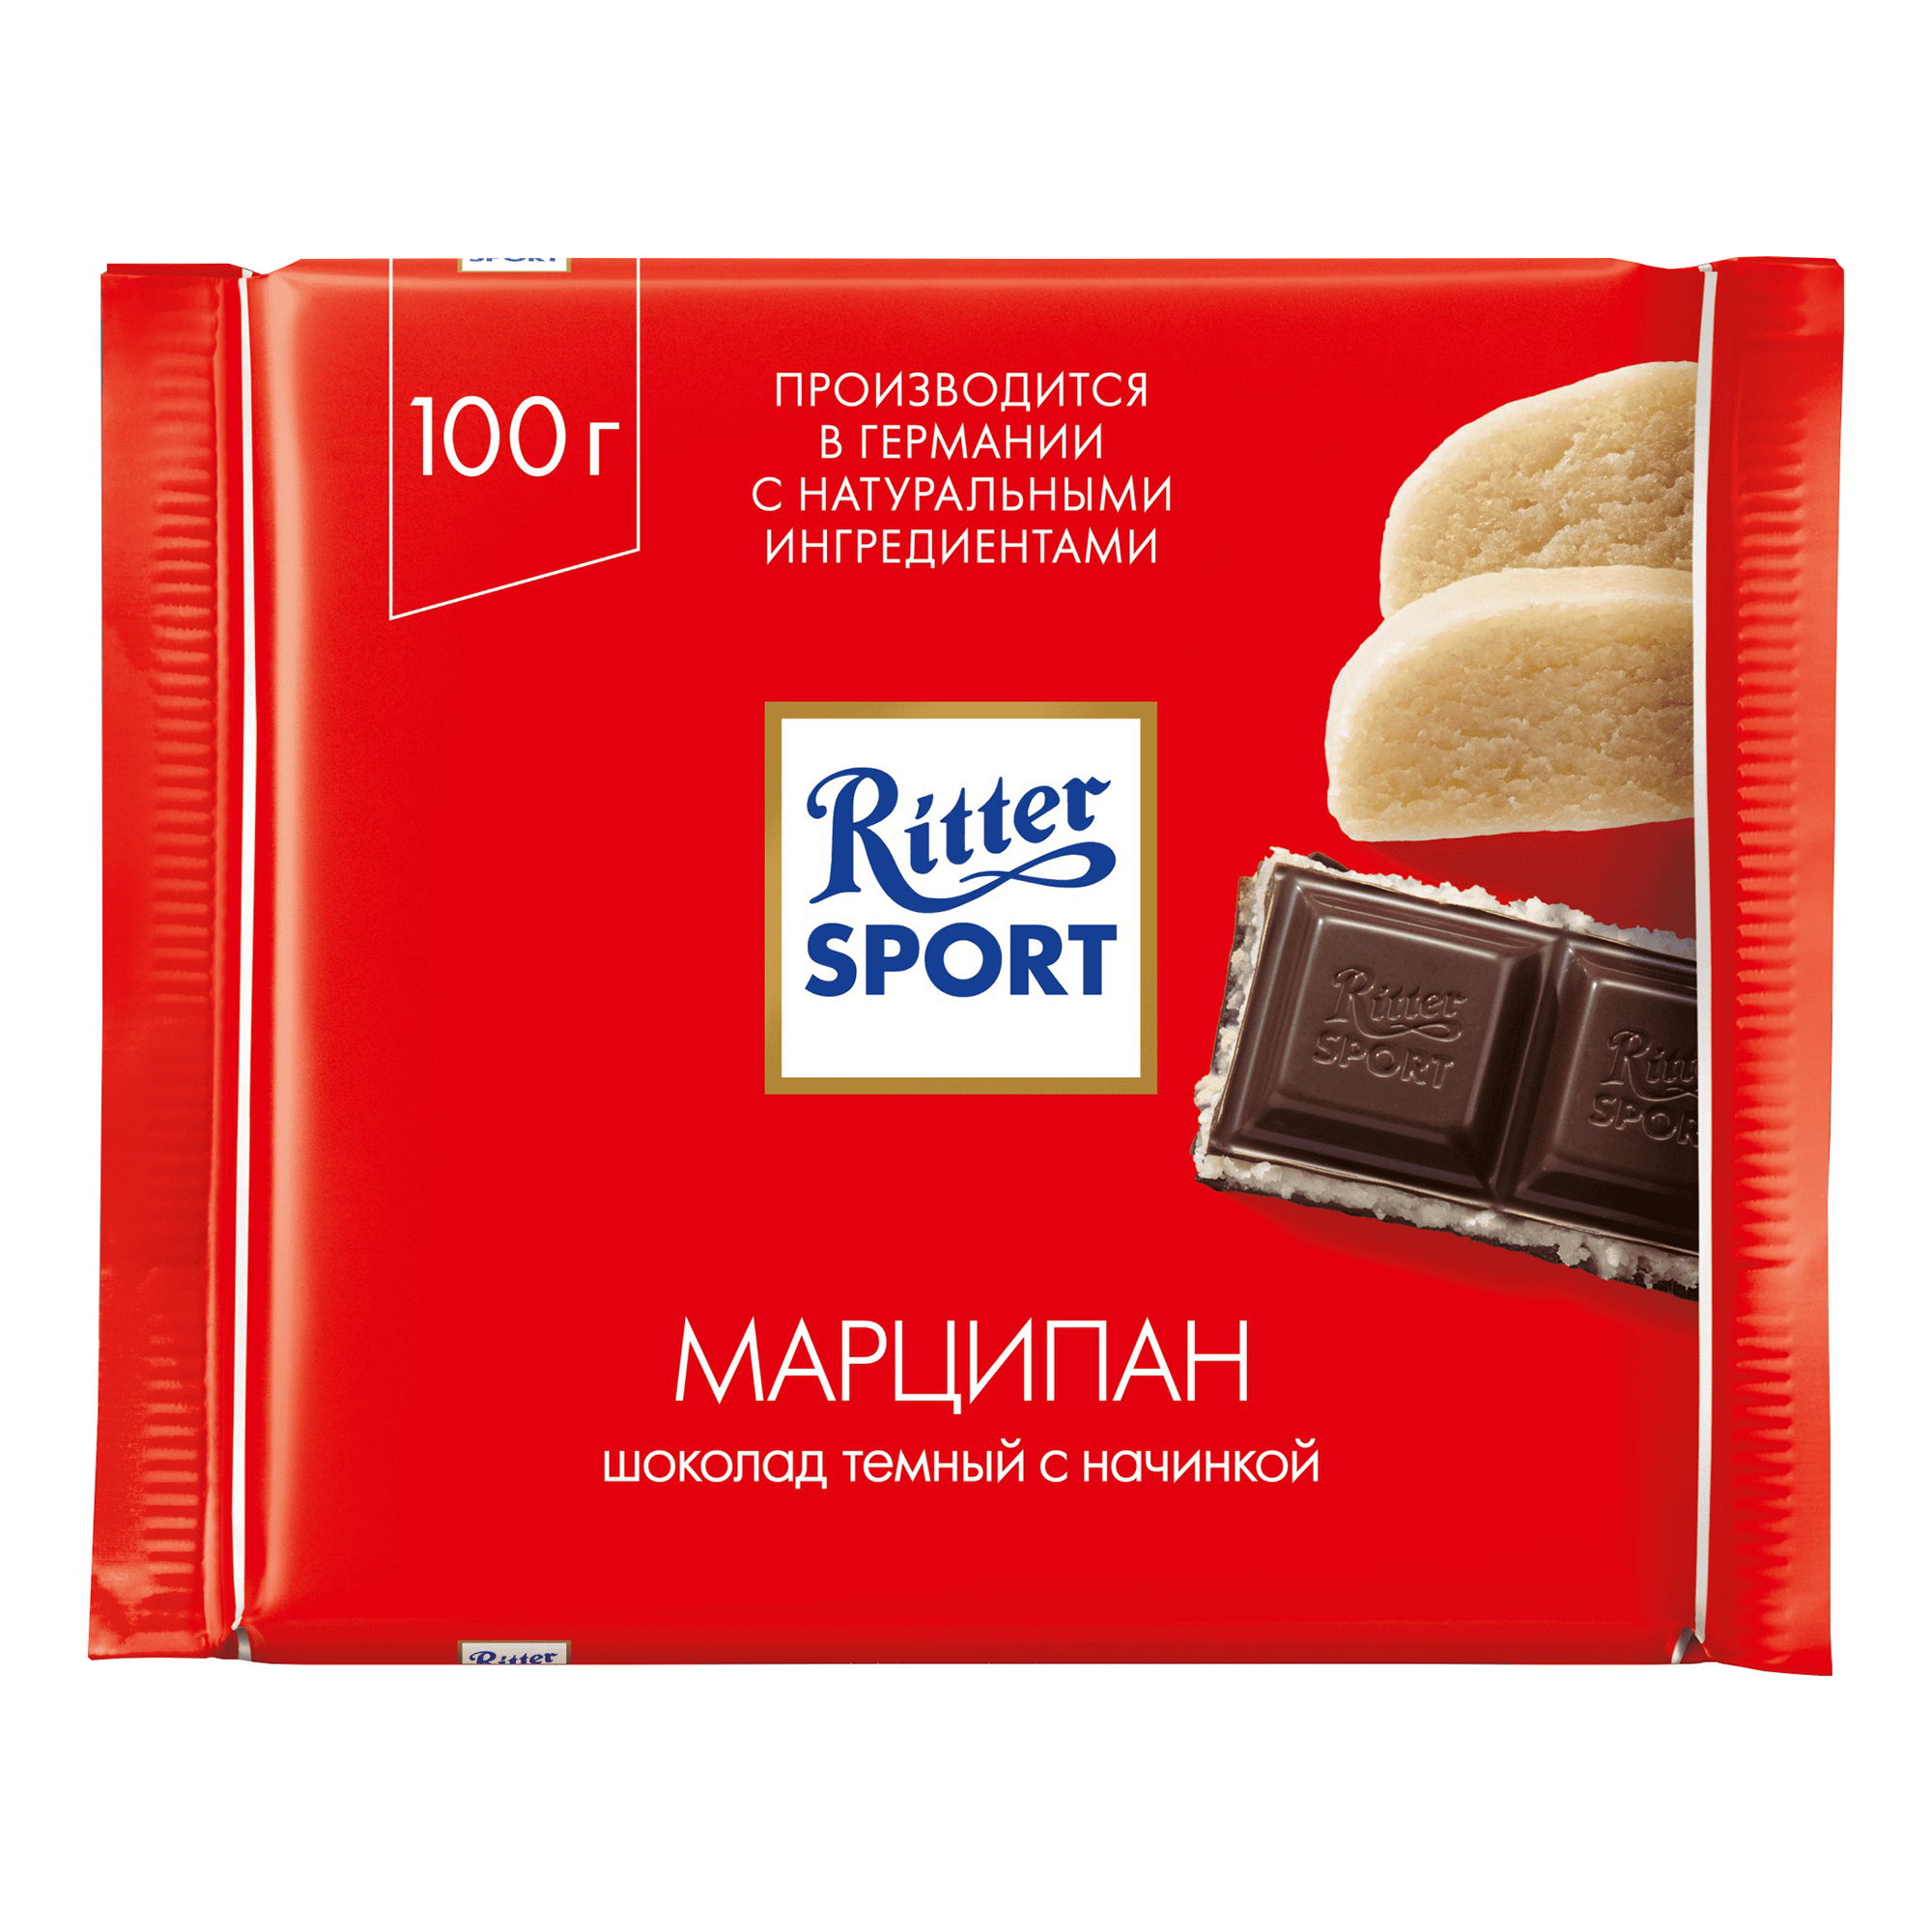 Шоколад Риттер Спорт Скидки